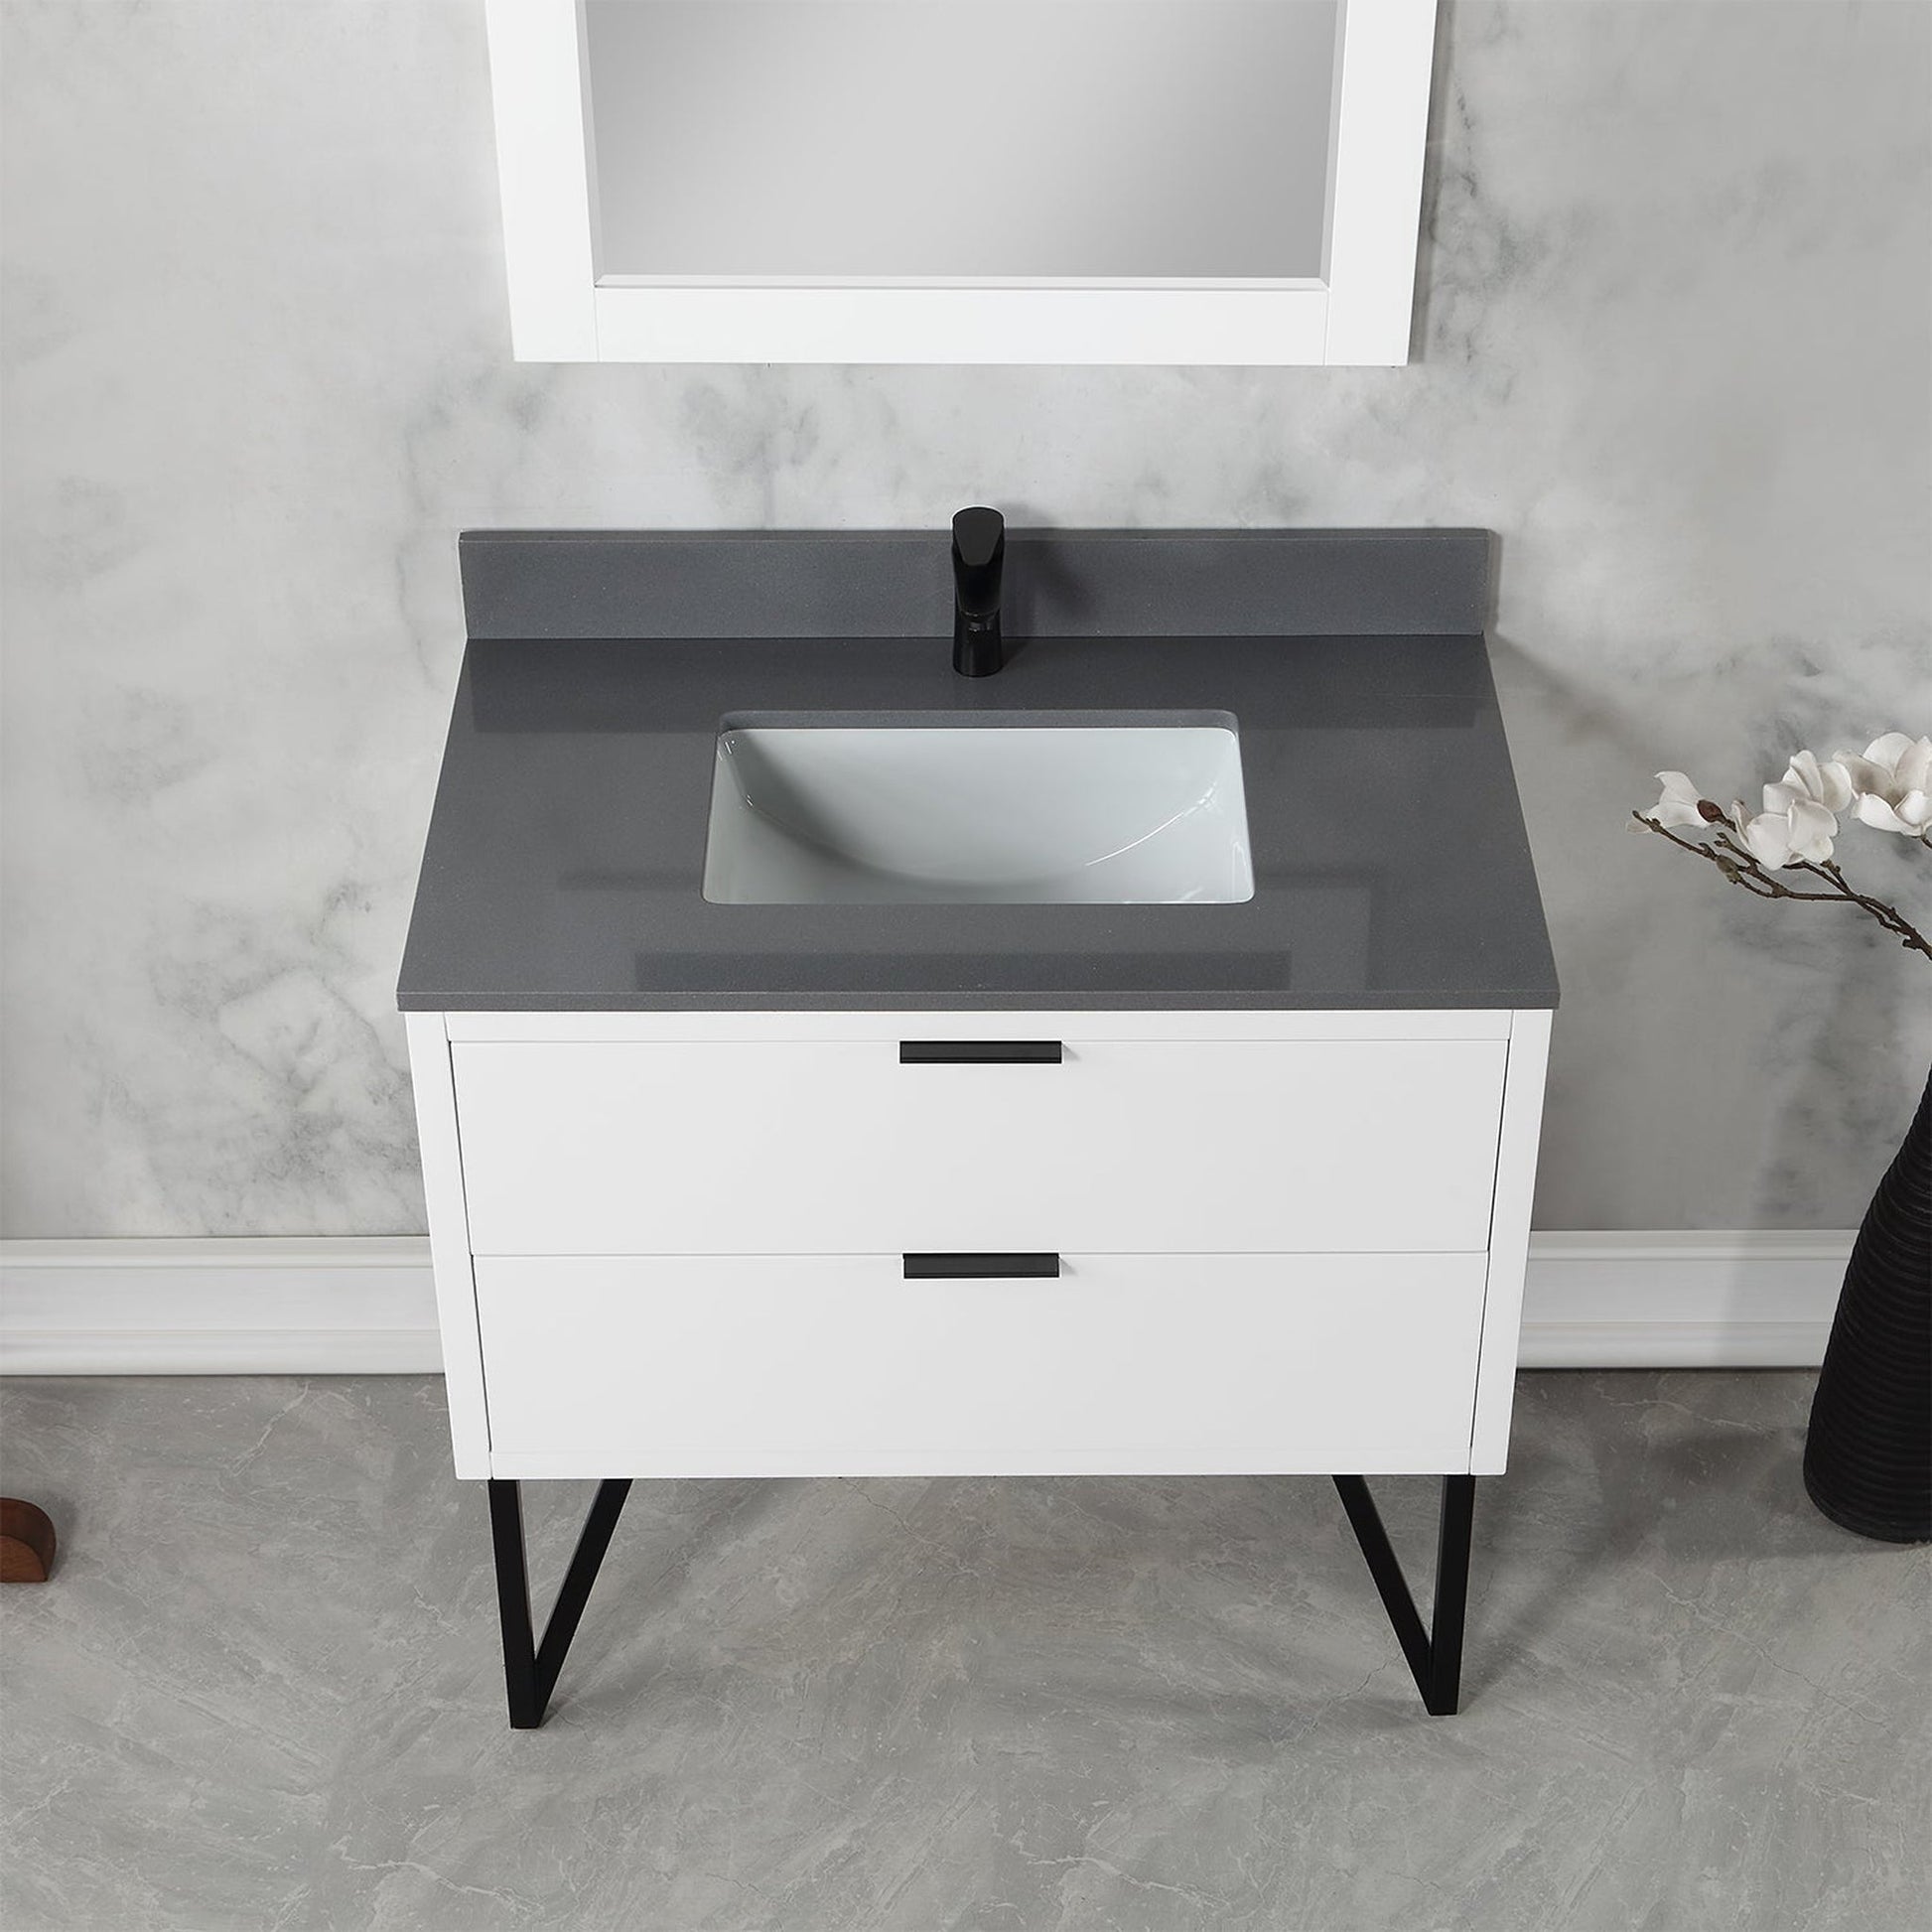 Altair Helios 36" White Freestanding Single Bathroom Vanity Set With Mirror, Concrete Gray Composite Stone Top, Single Rectangular Undermount Ceramic Sink, Overflow, and Backsplash